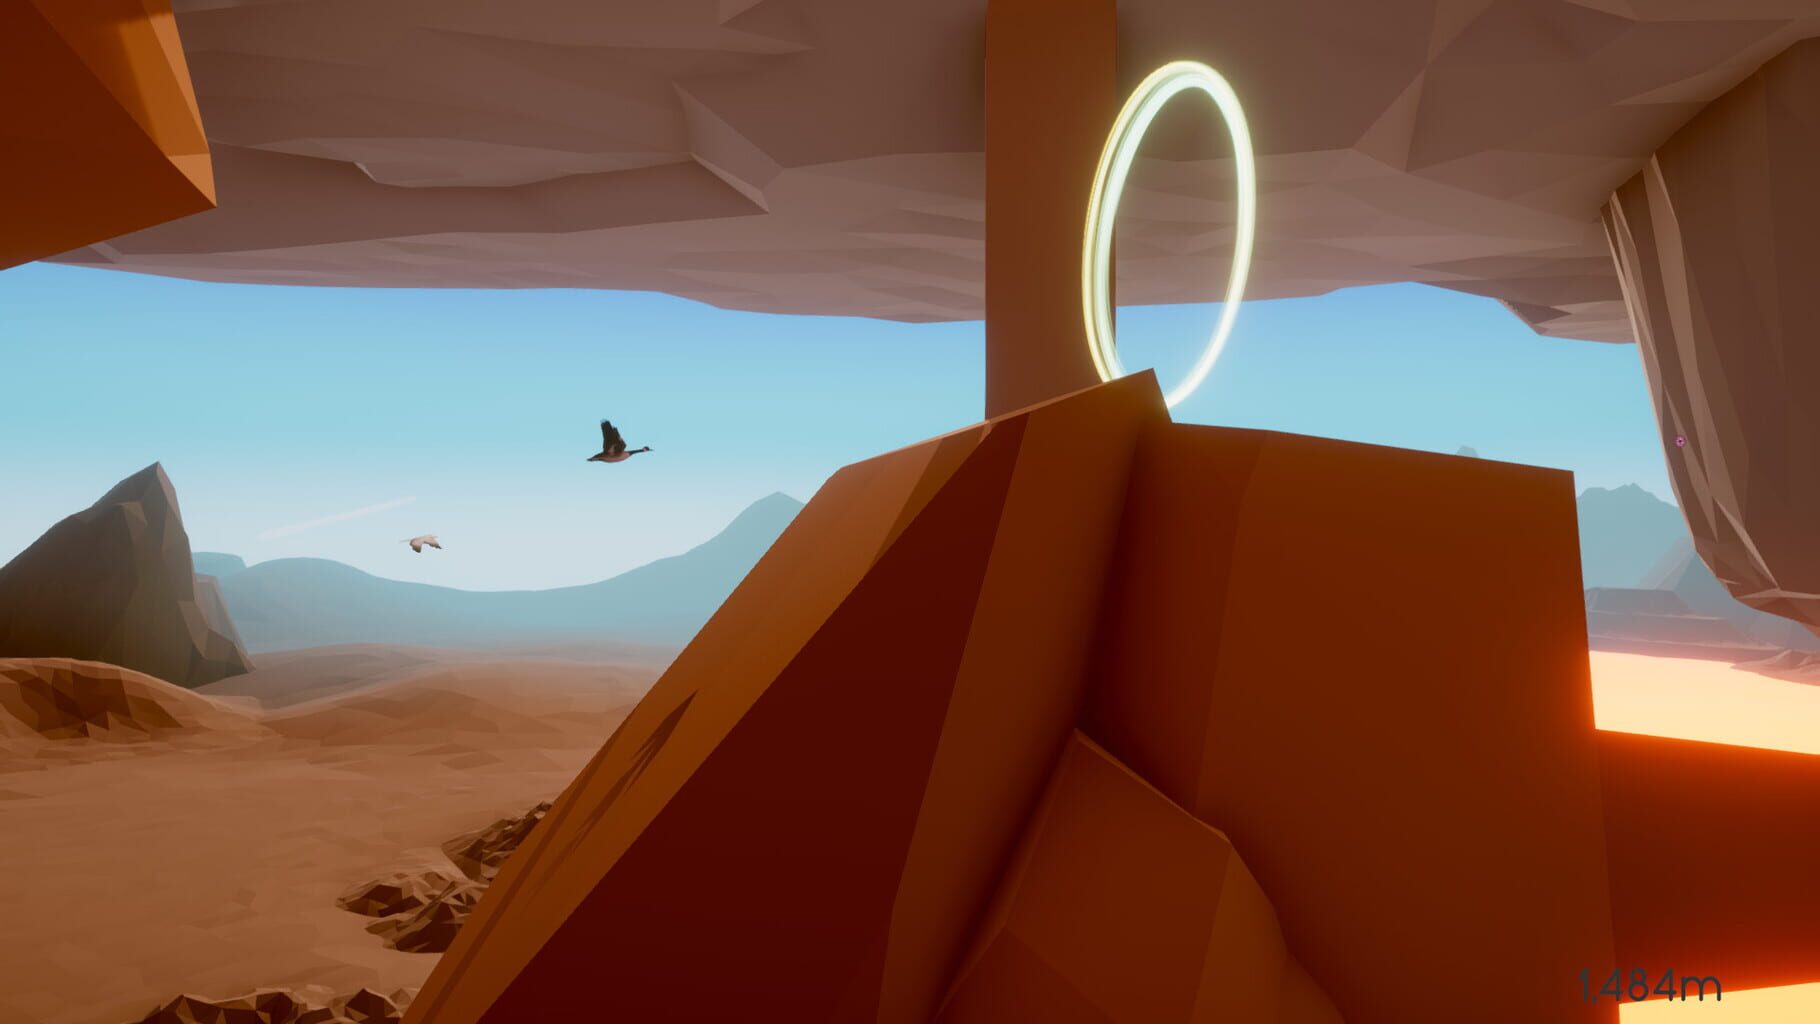 Dune Sea screenshot